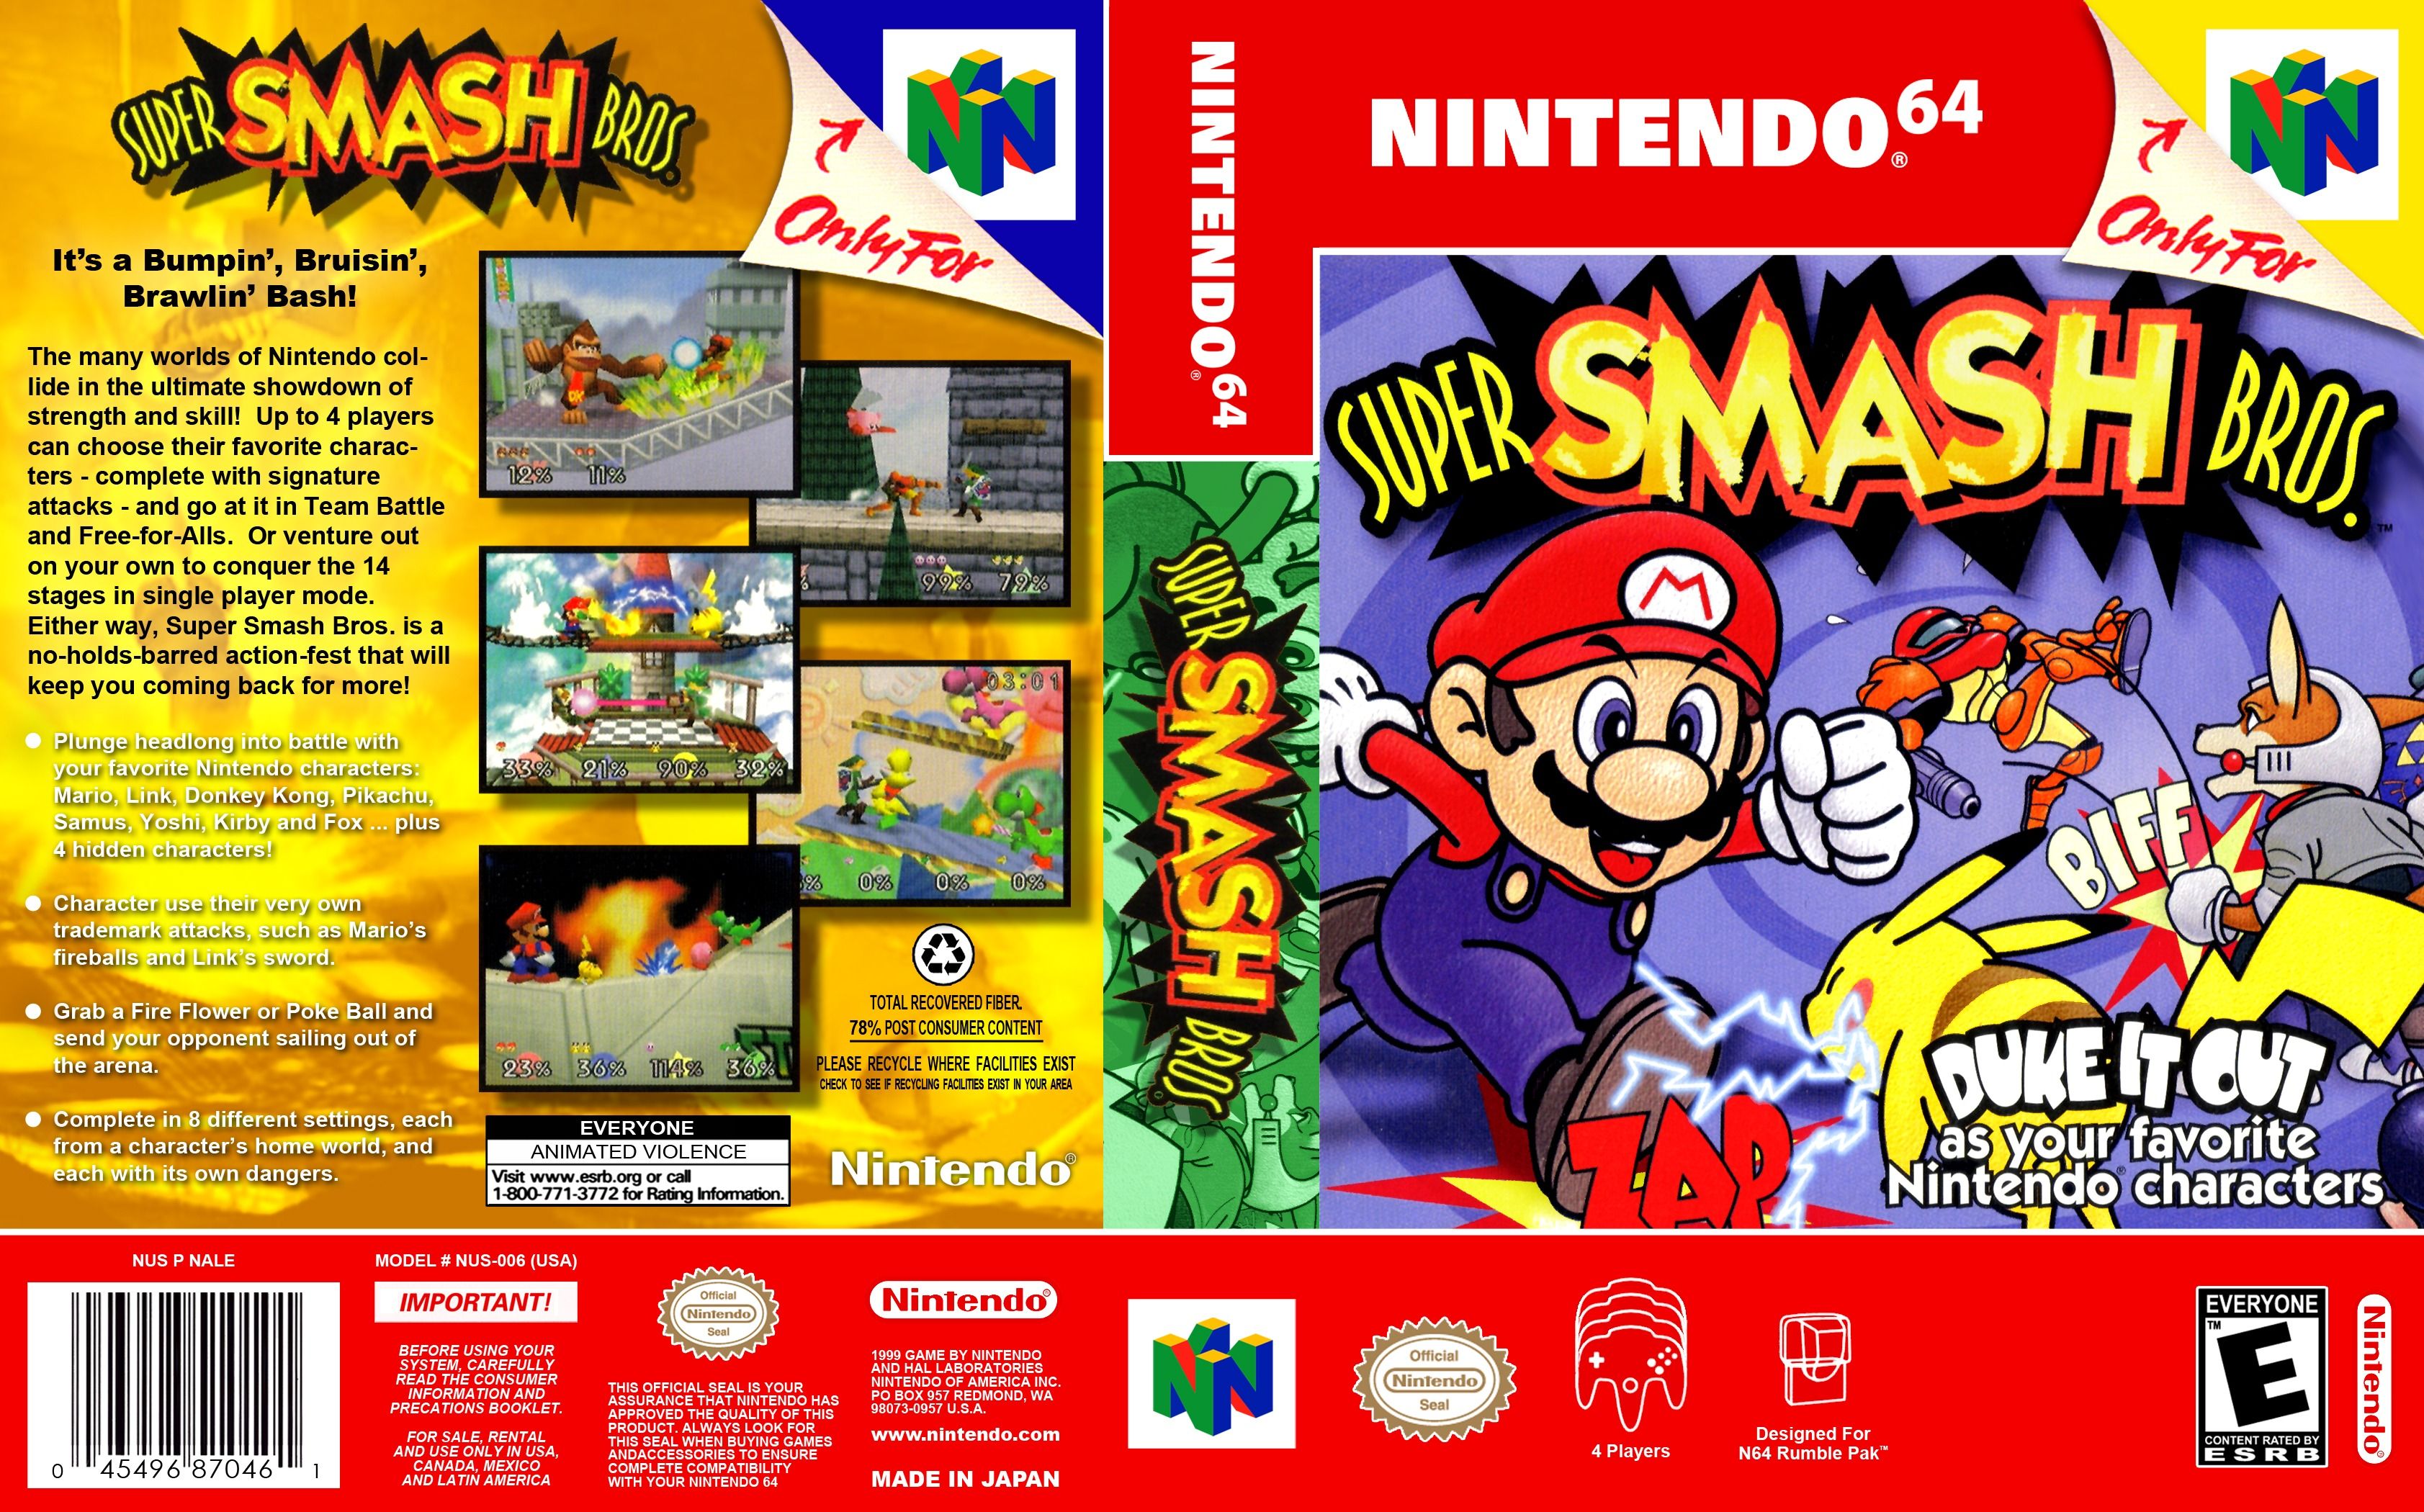 Nintendo 64 перевод. Nintendo 64 смэш БРОС. Супер Смаш БРОС Нинтендо 64. Super Smash Bros на Нинтендо 64. Super Smash Bros Nintendo 64.